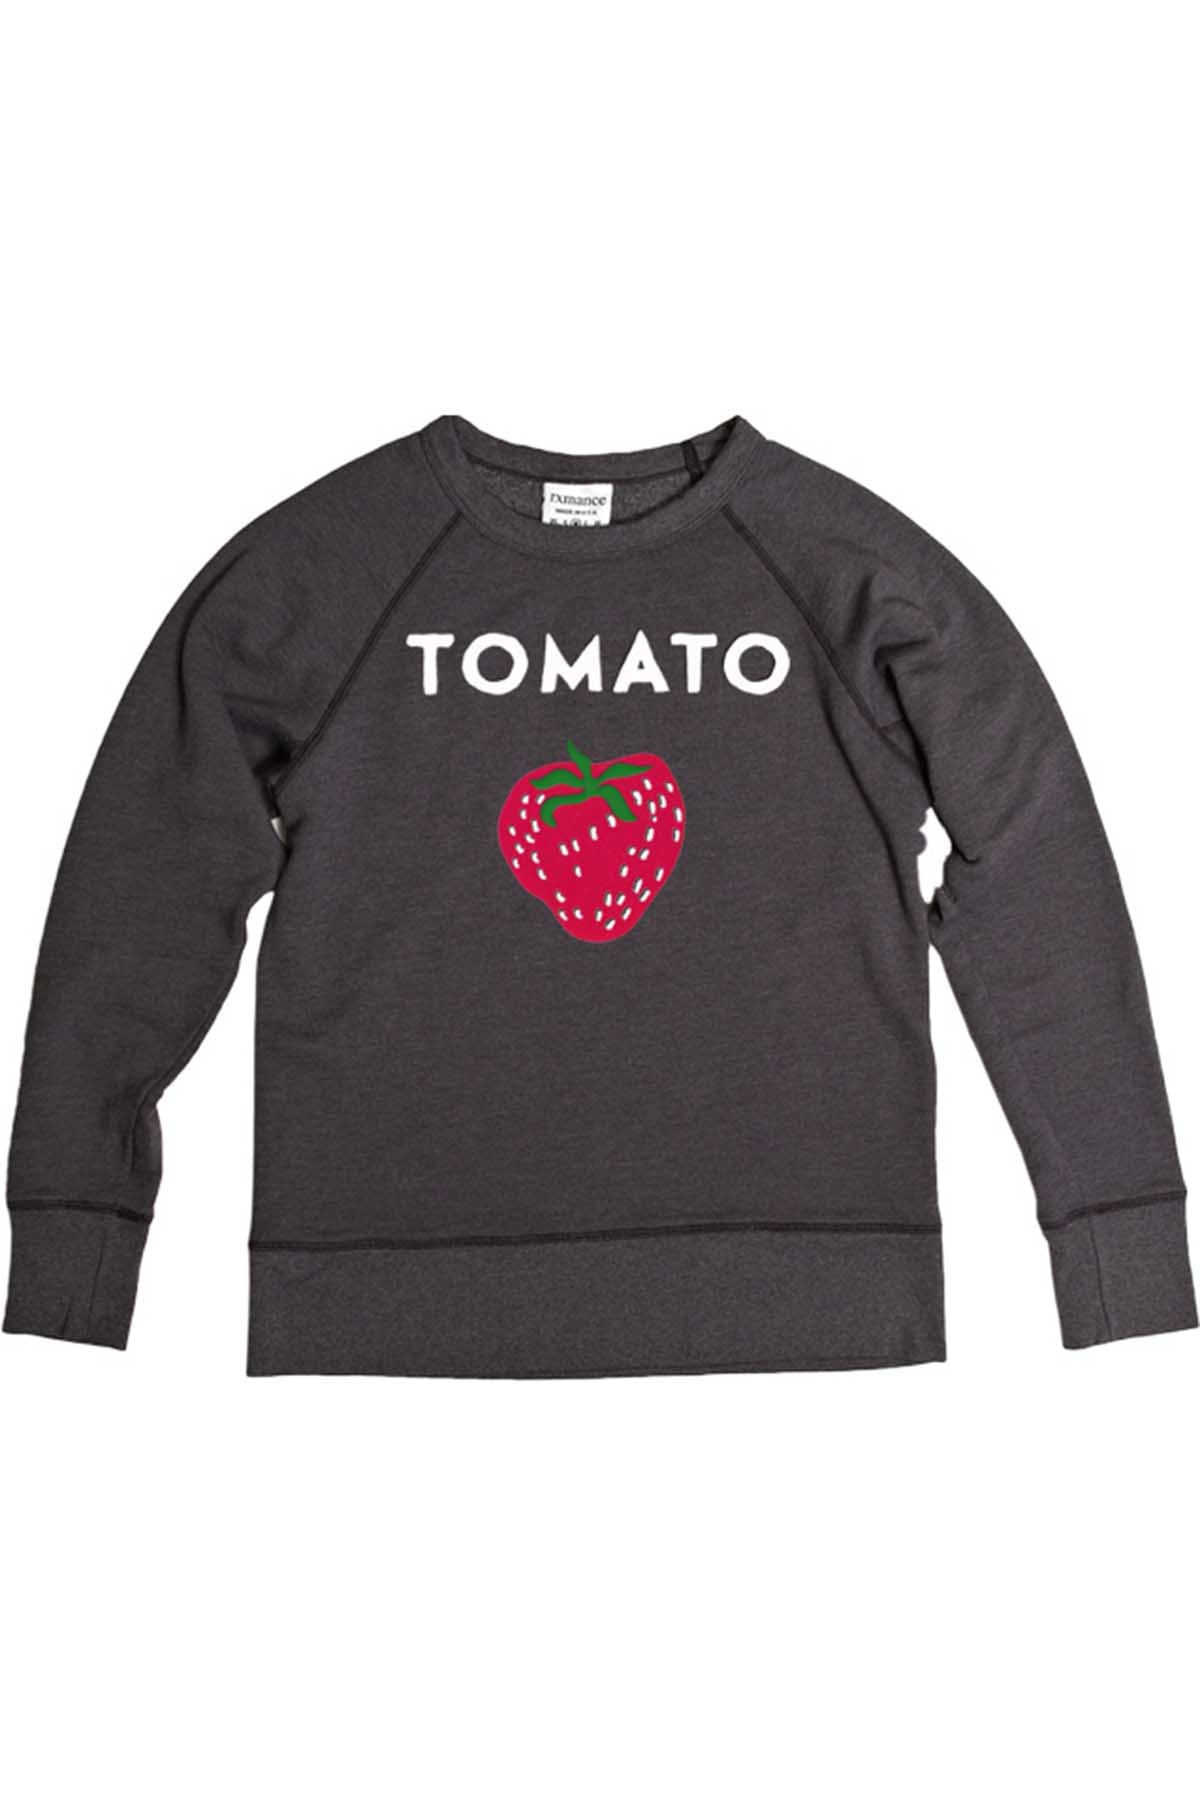 Rxmance Faded Black Tomato Crew Sweatshirt